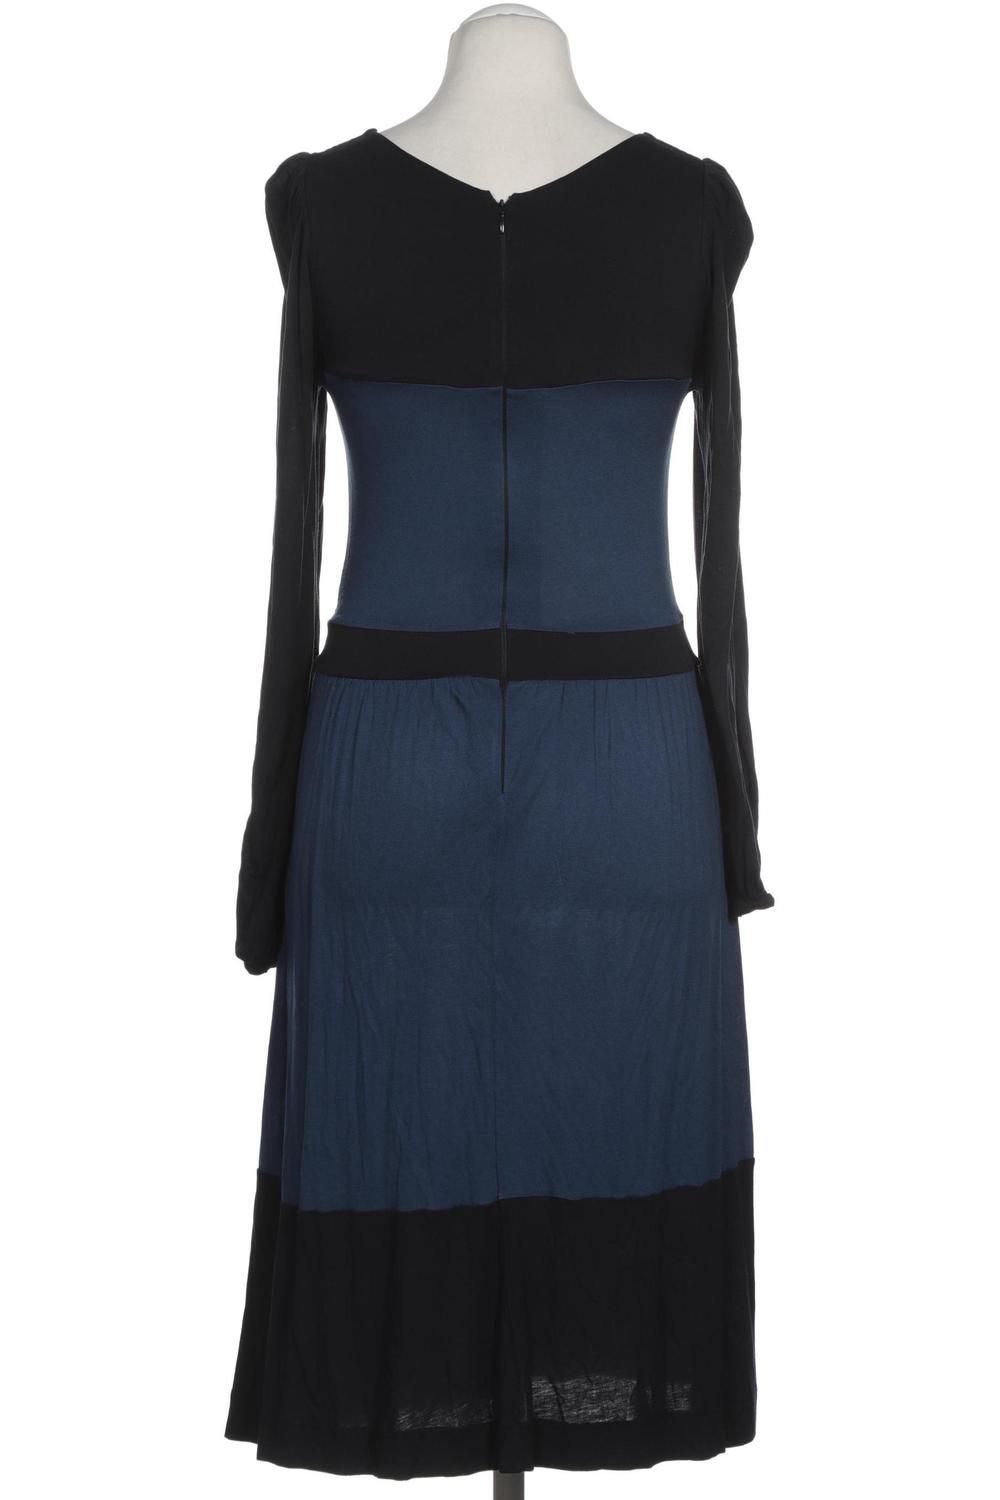 French Connection Damen Kleid UK 10 Second Hand kaufen | ubup